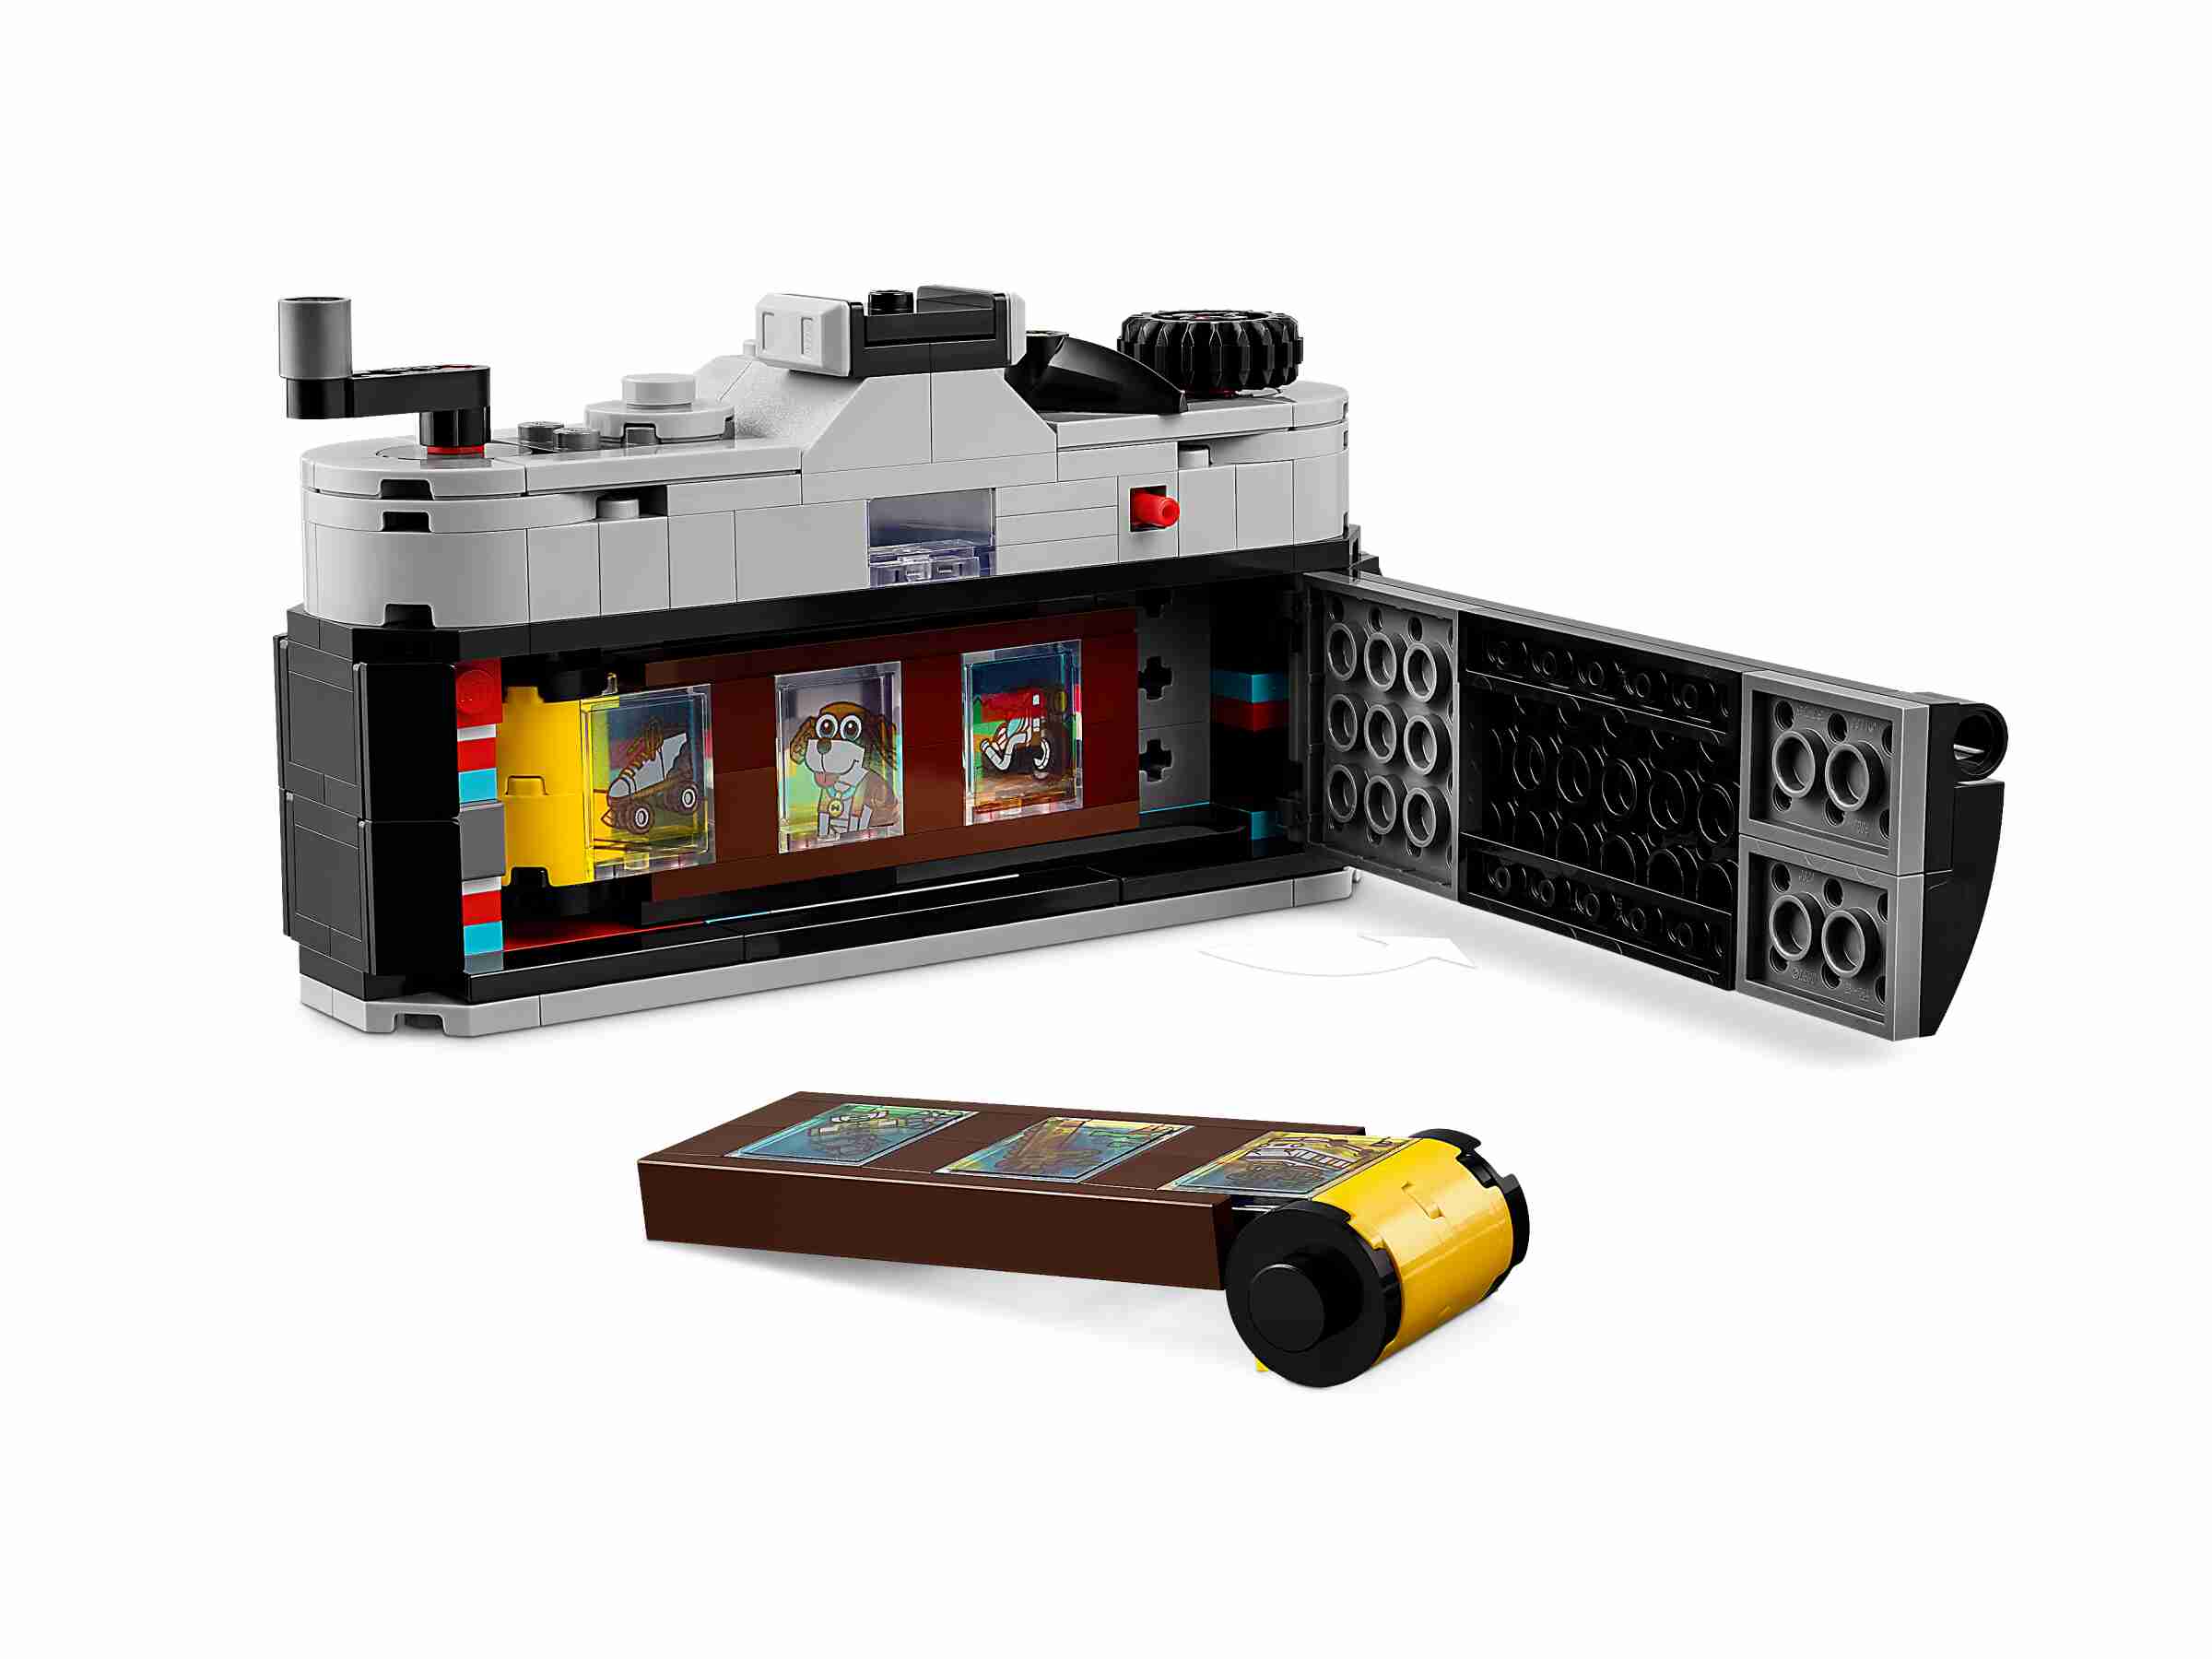 LEGO 31147 Creator 3-in-1 Retro Kamera, Retro-Videokamera oder Retro-Fernseher